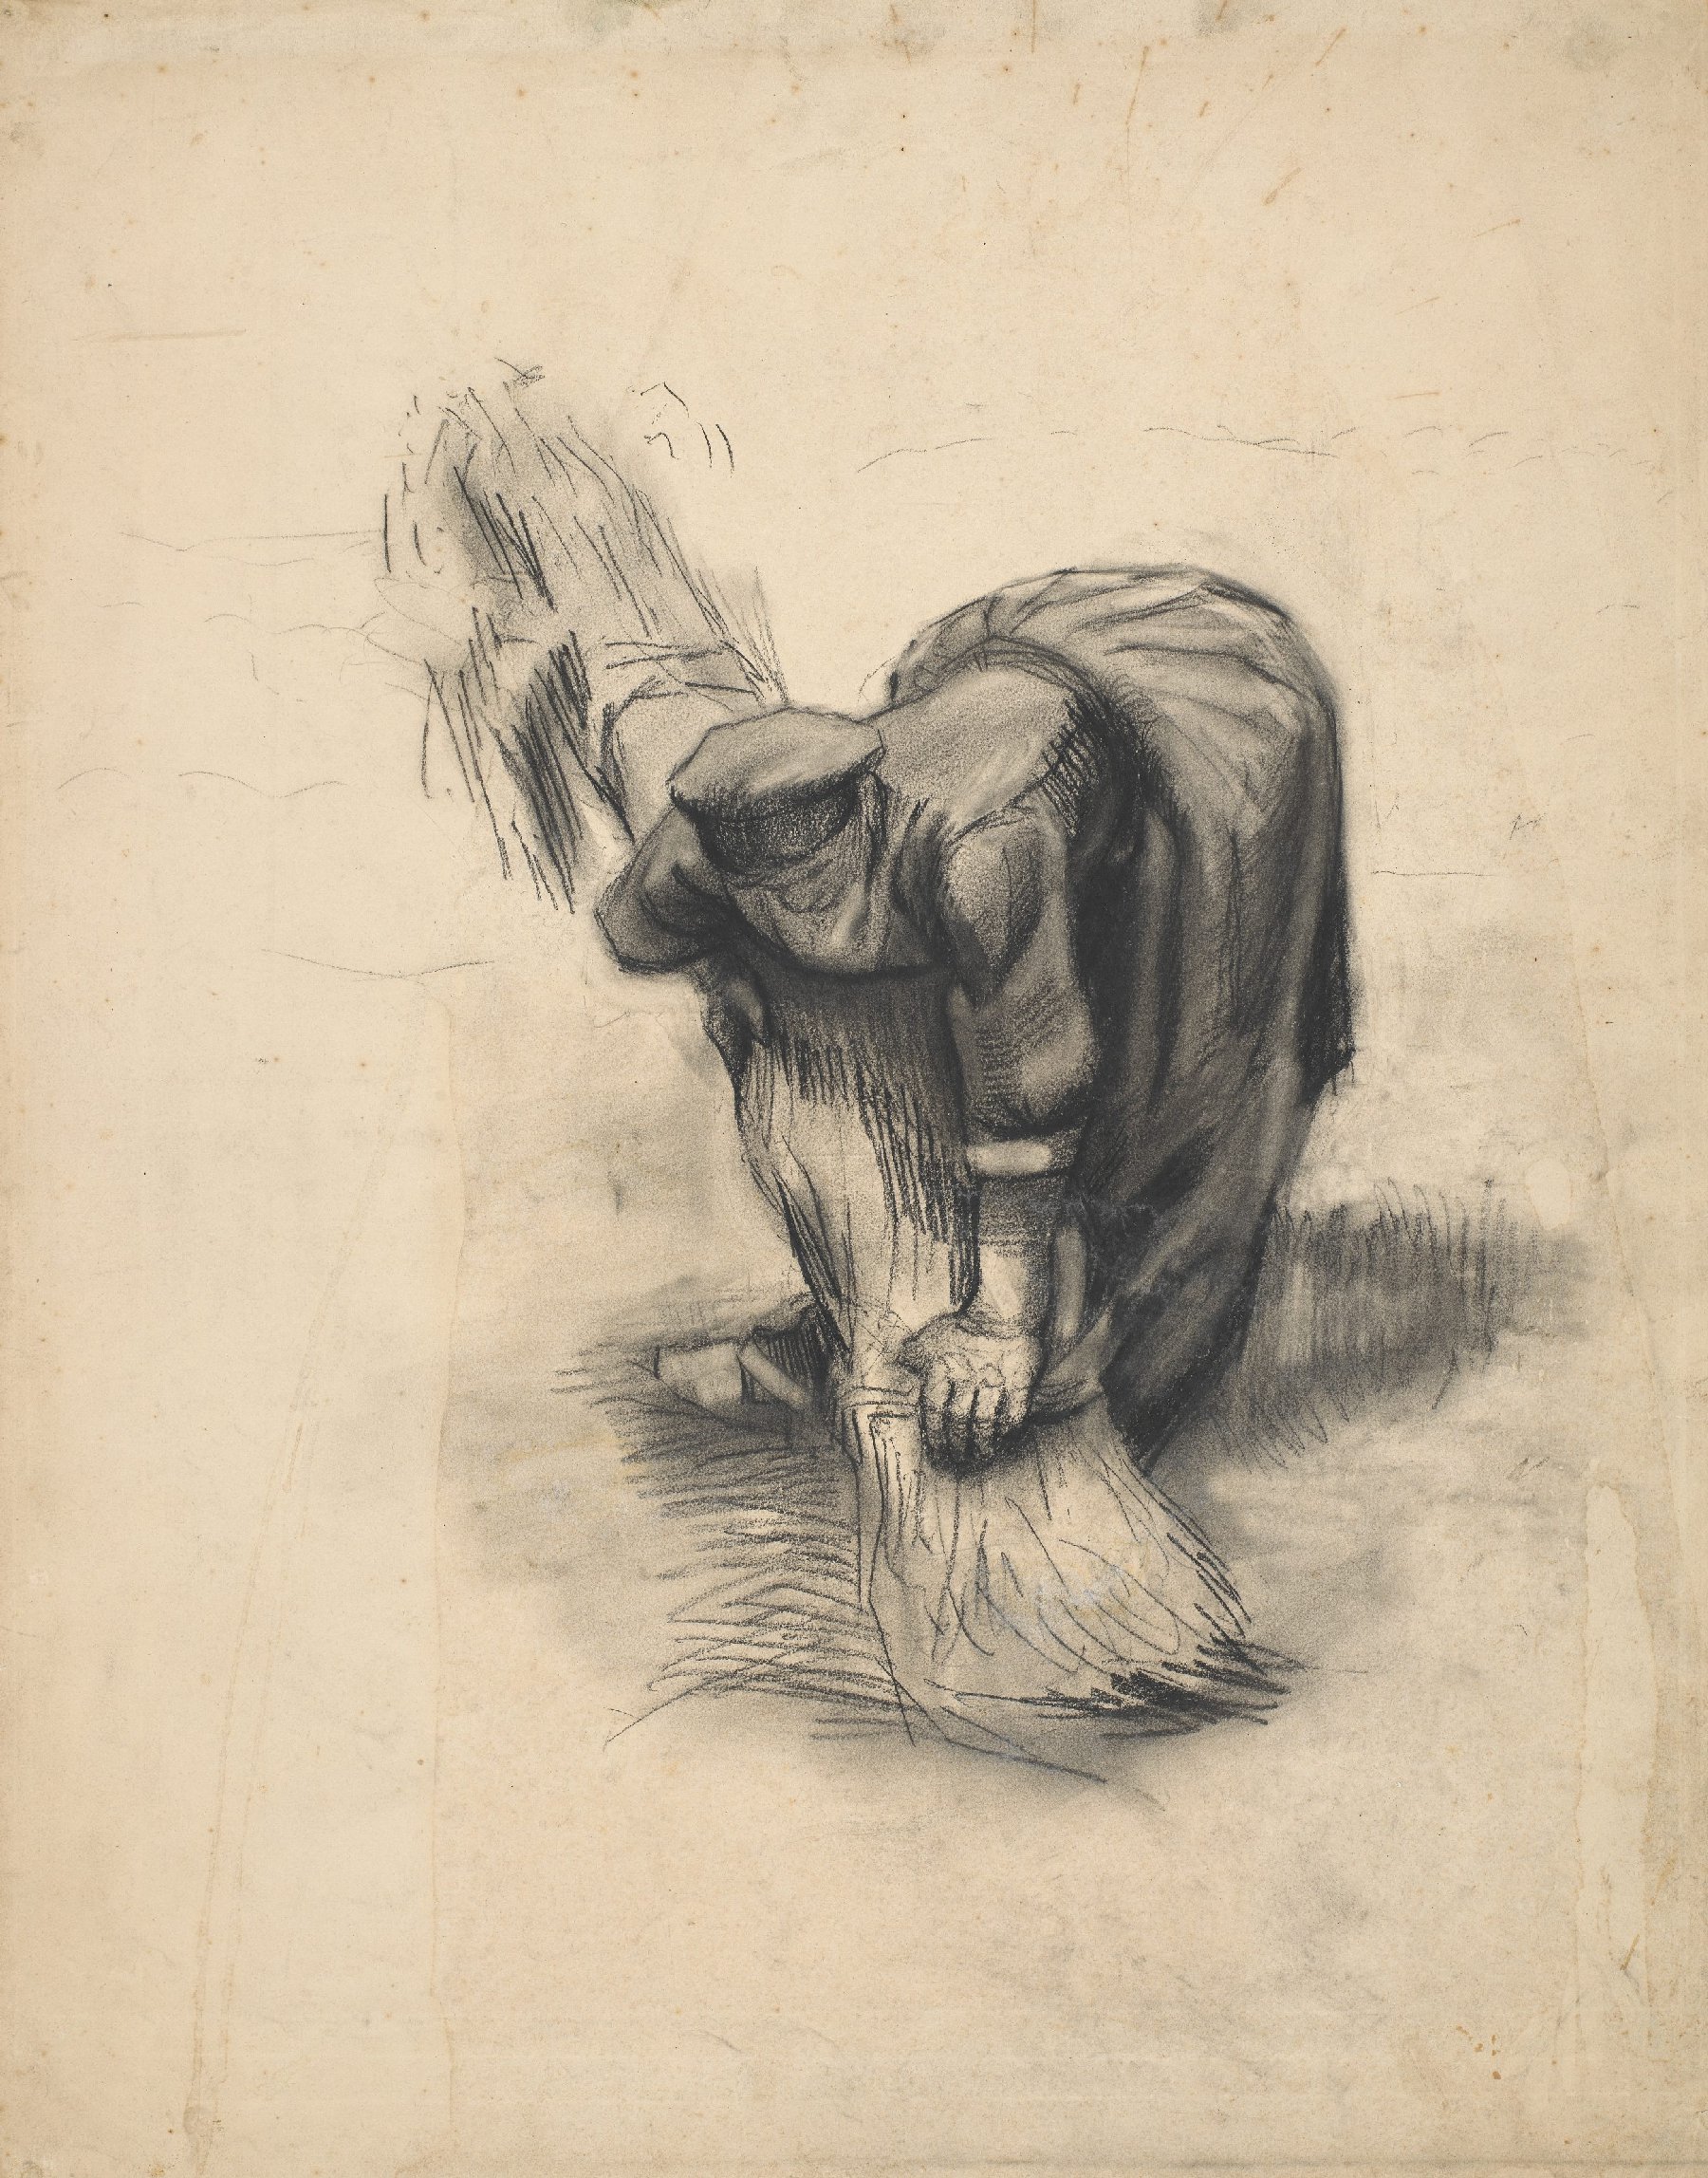 Schovenbindende boerin Vincent van Gogh (1853 - 1890), Nuenen, juli-september 1885